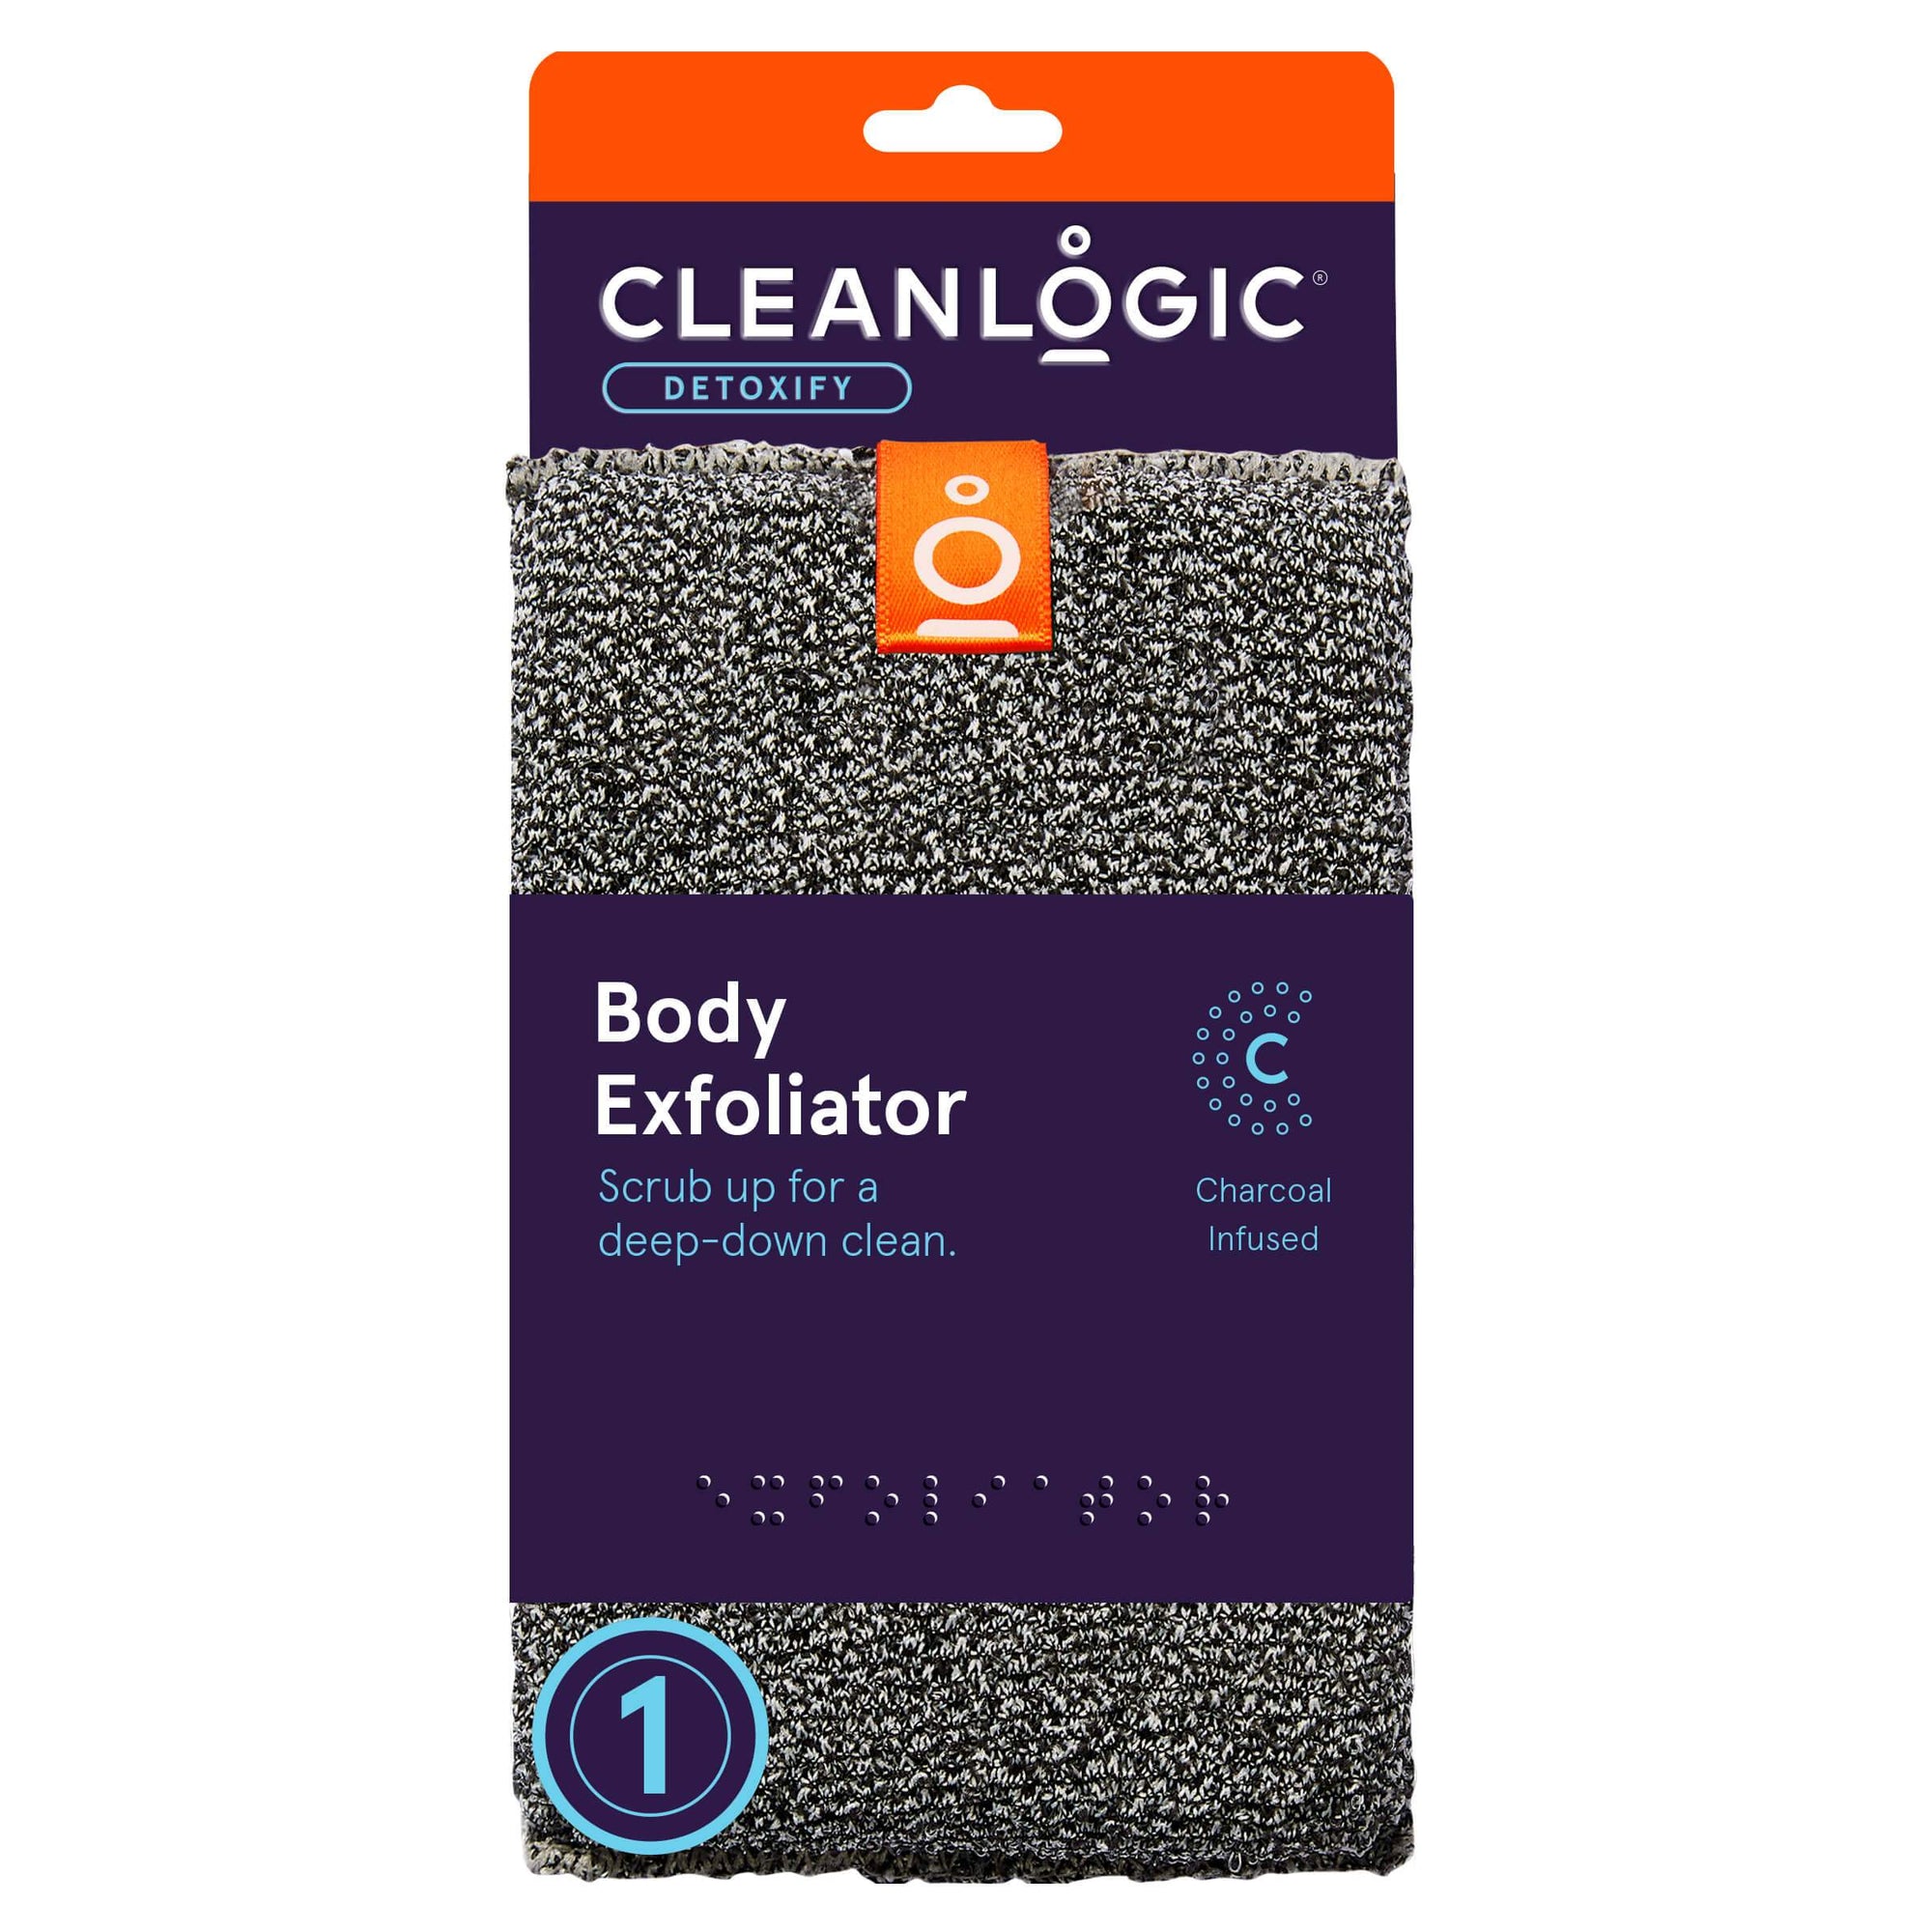 Cleanlogic Charcoal Body Exfoliator